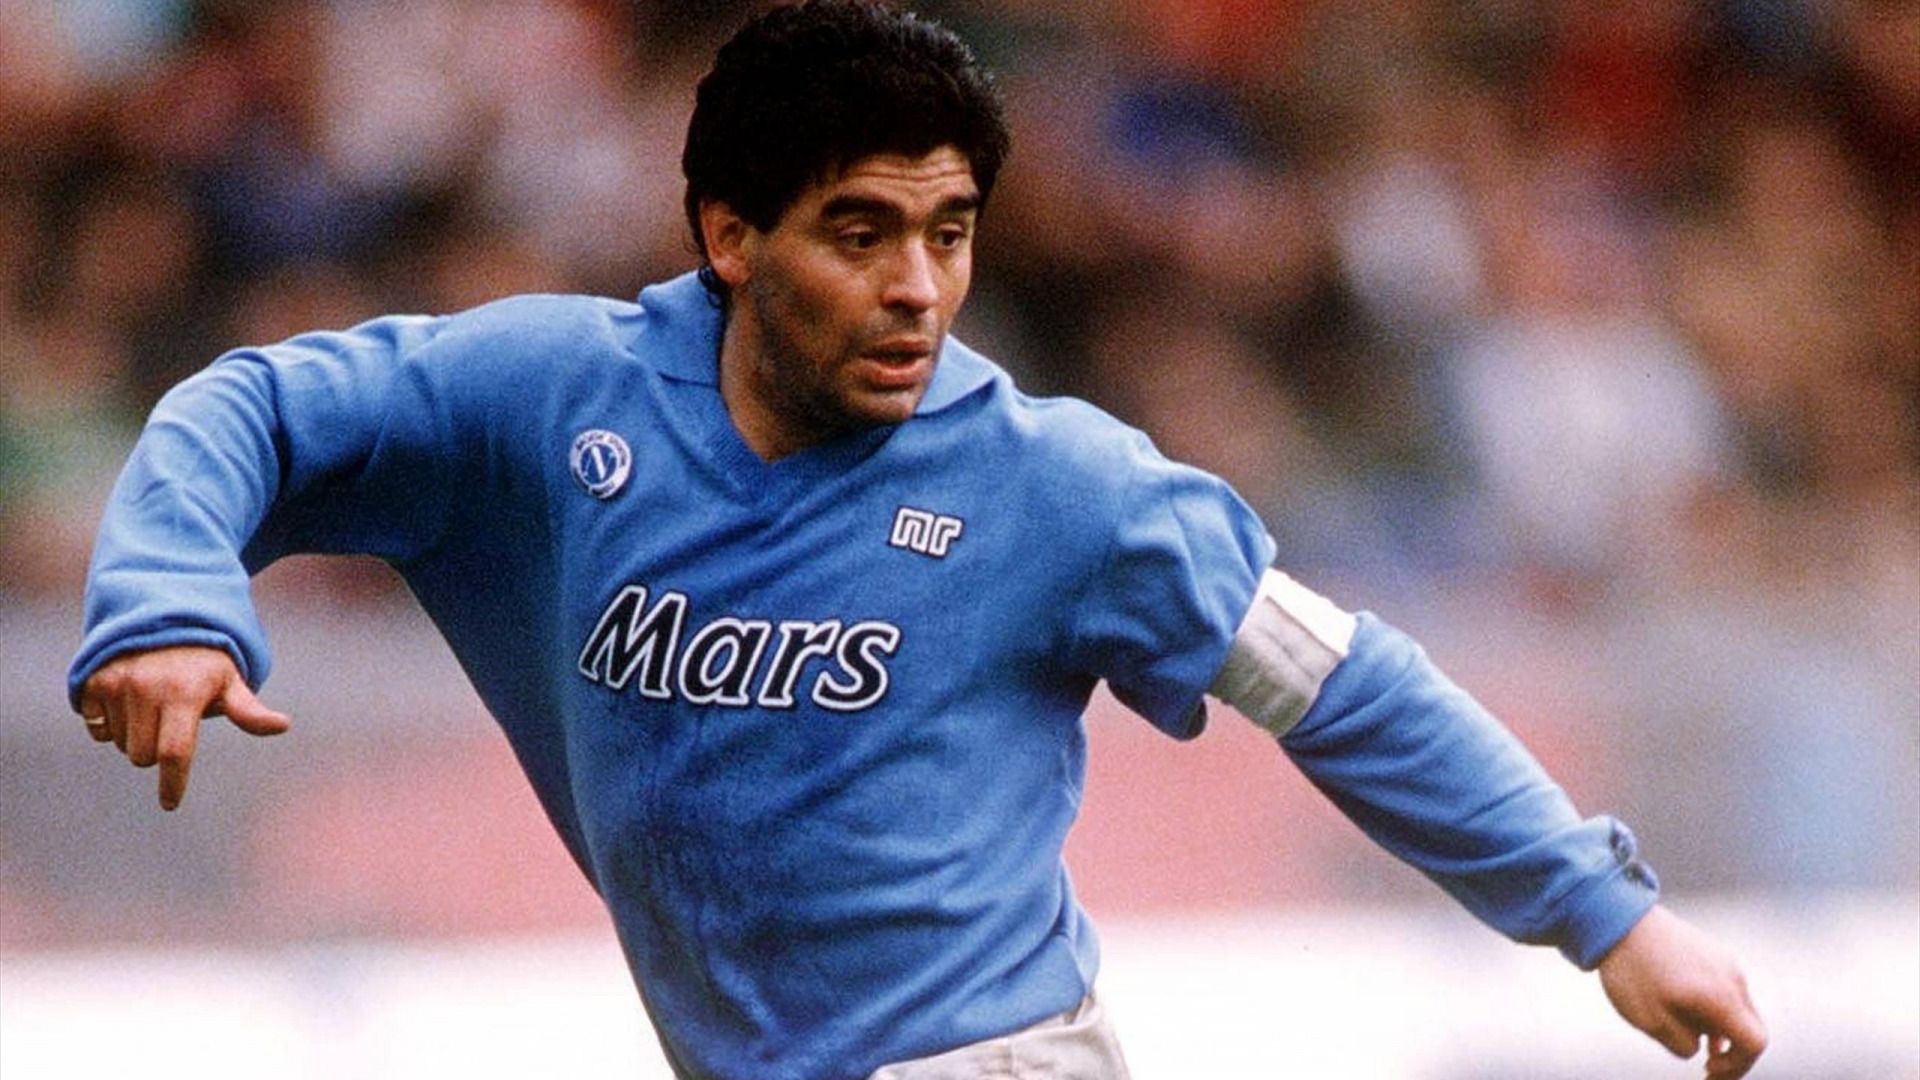 Download wallpaper blue, captain, Mars, Napoli, Diego Maradona, section sports in resolution 1920x1080